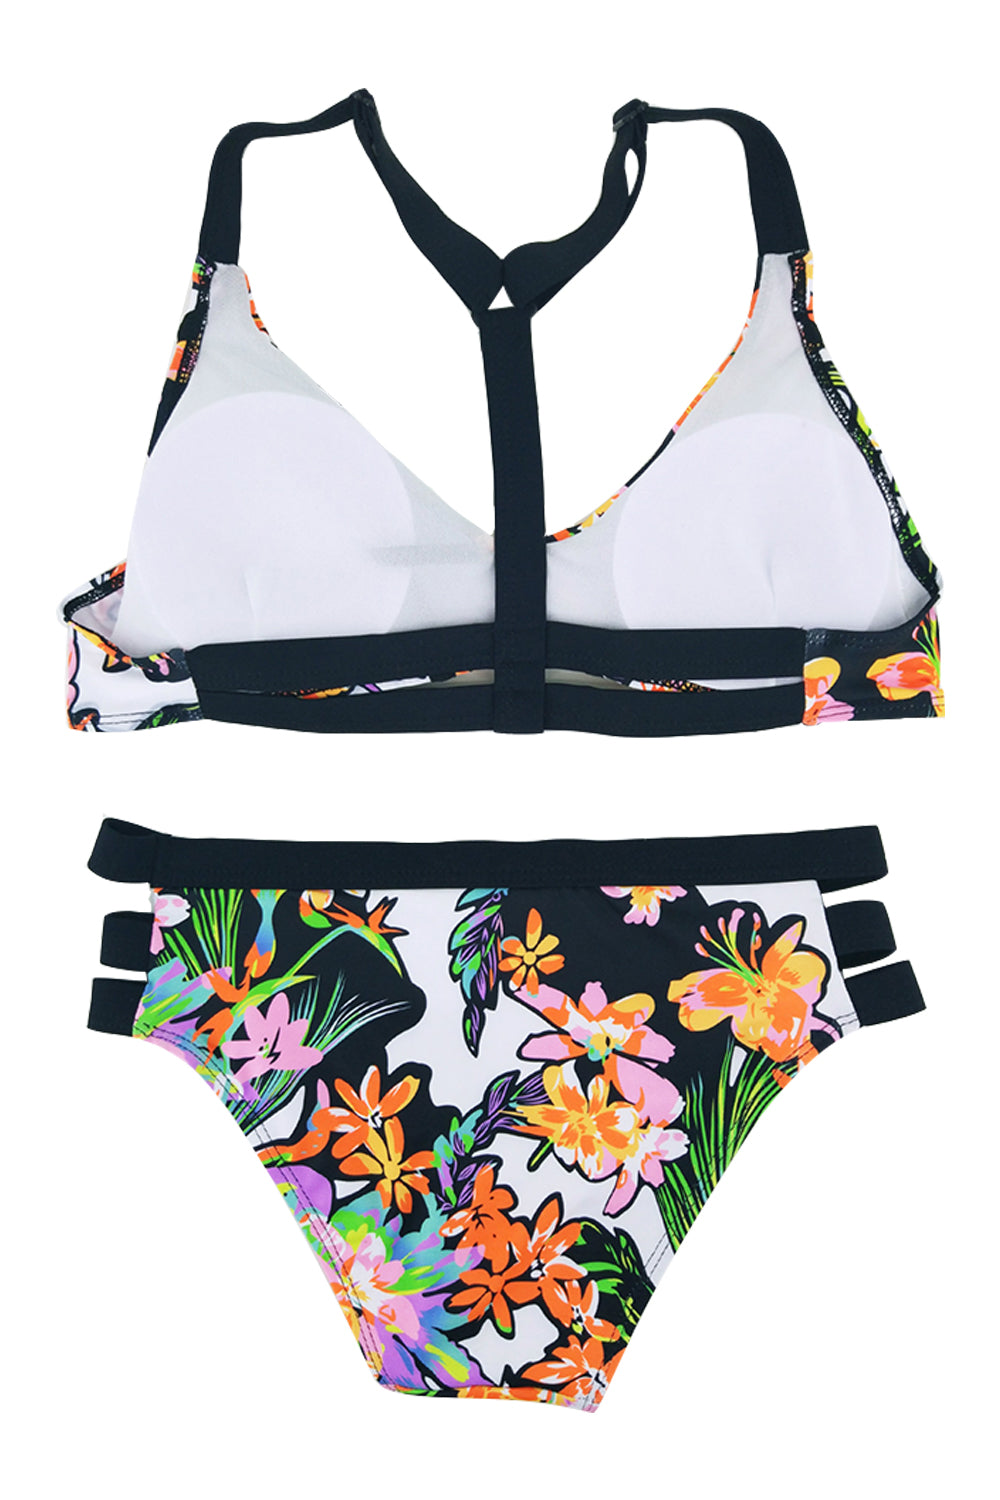 Iyasson Floral Printing Bikini Set